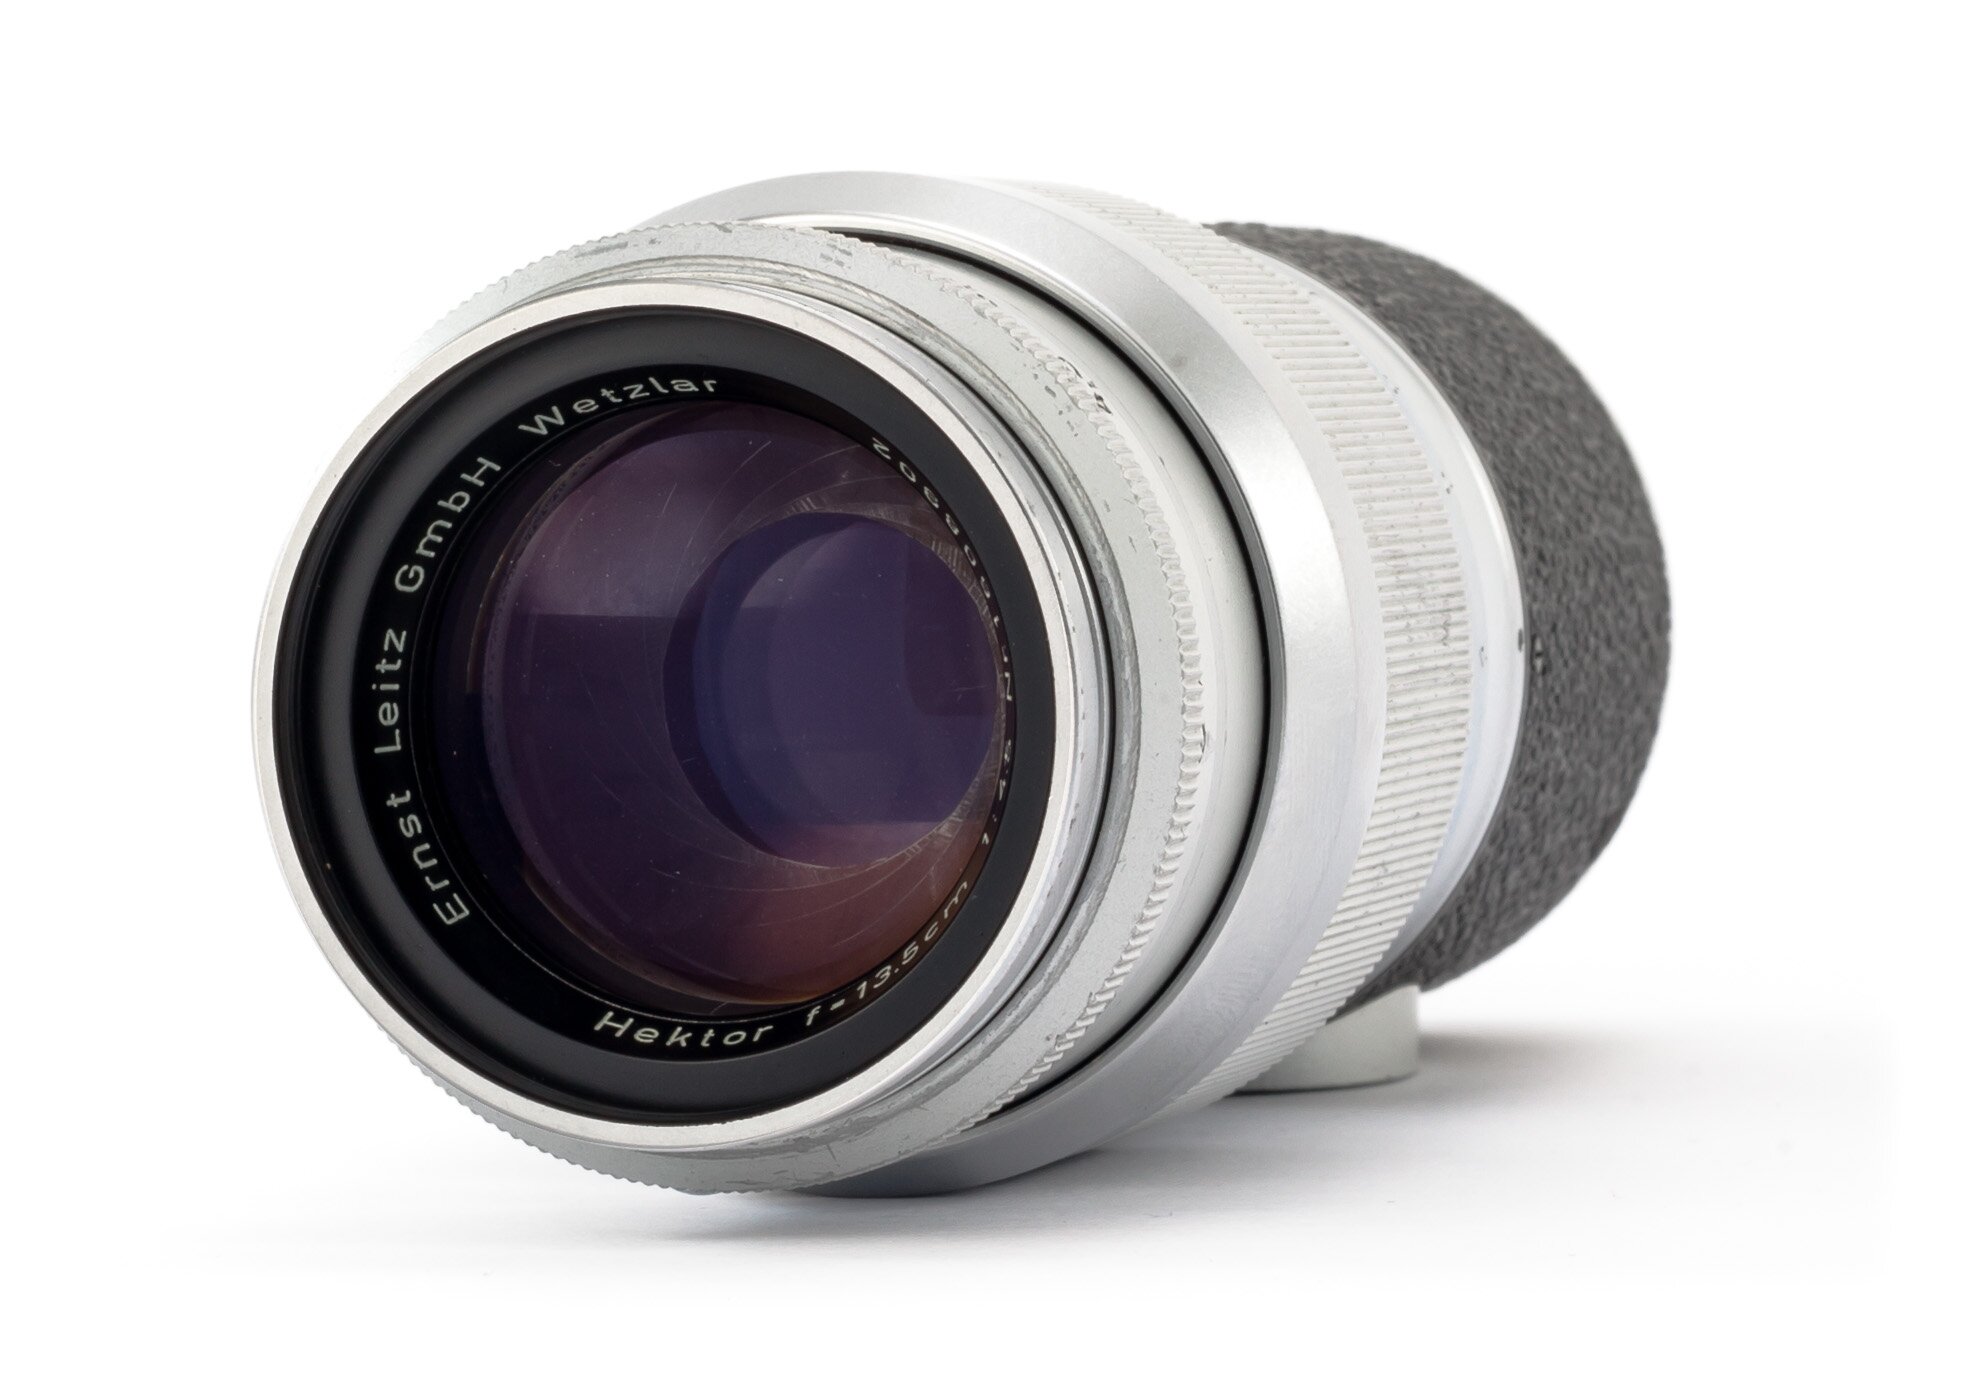 Leica Hektor 13,5cm F4.5 mit Leica SHOOC Sucher